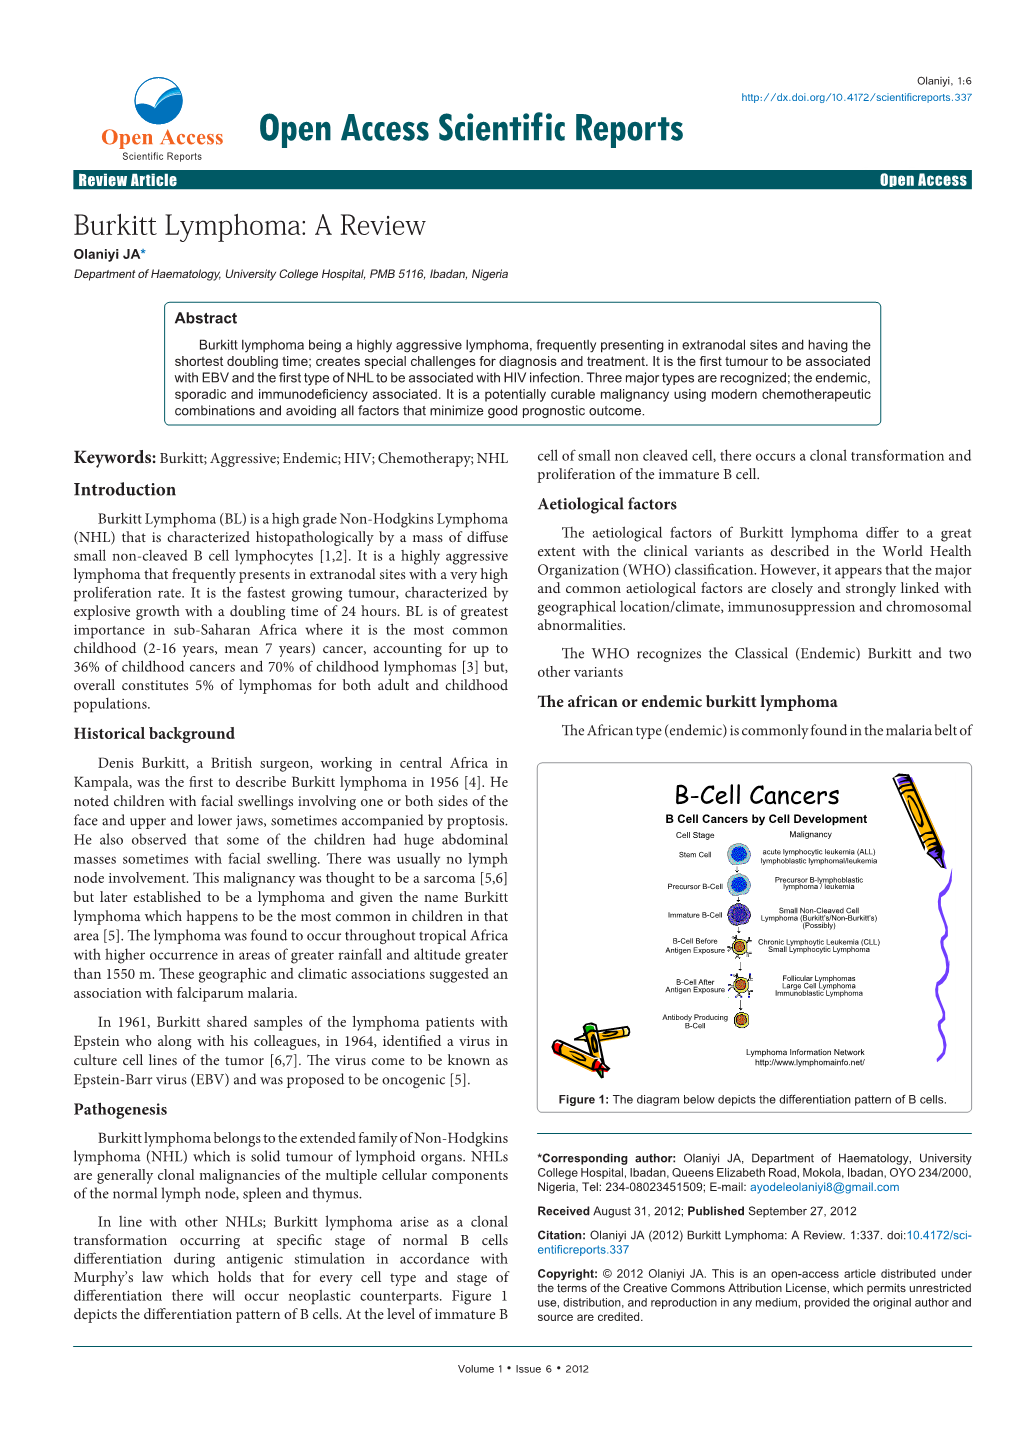 Burkitt Lymphoma: a Review Olaniyi JA* Department of Haematology, University College Hospital, PMB 5116, Ibadan, Nigeria